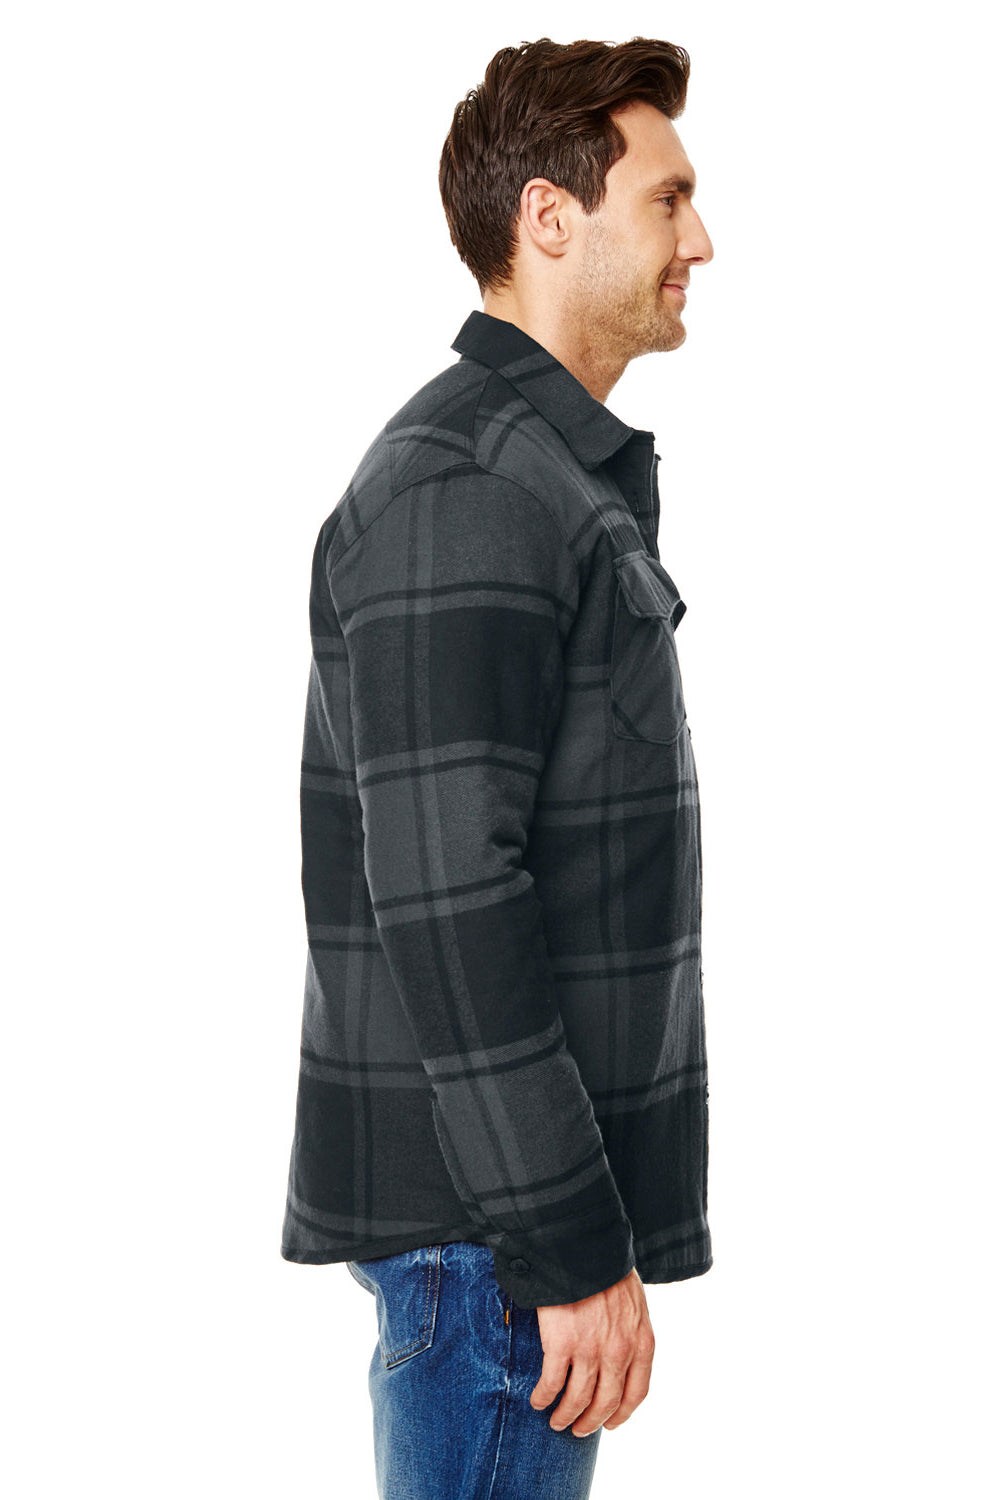 Burnside 8610 Mens Quilted Flannel Button Down Shirt Jacket Black Plaid Model Side